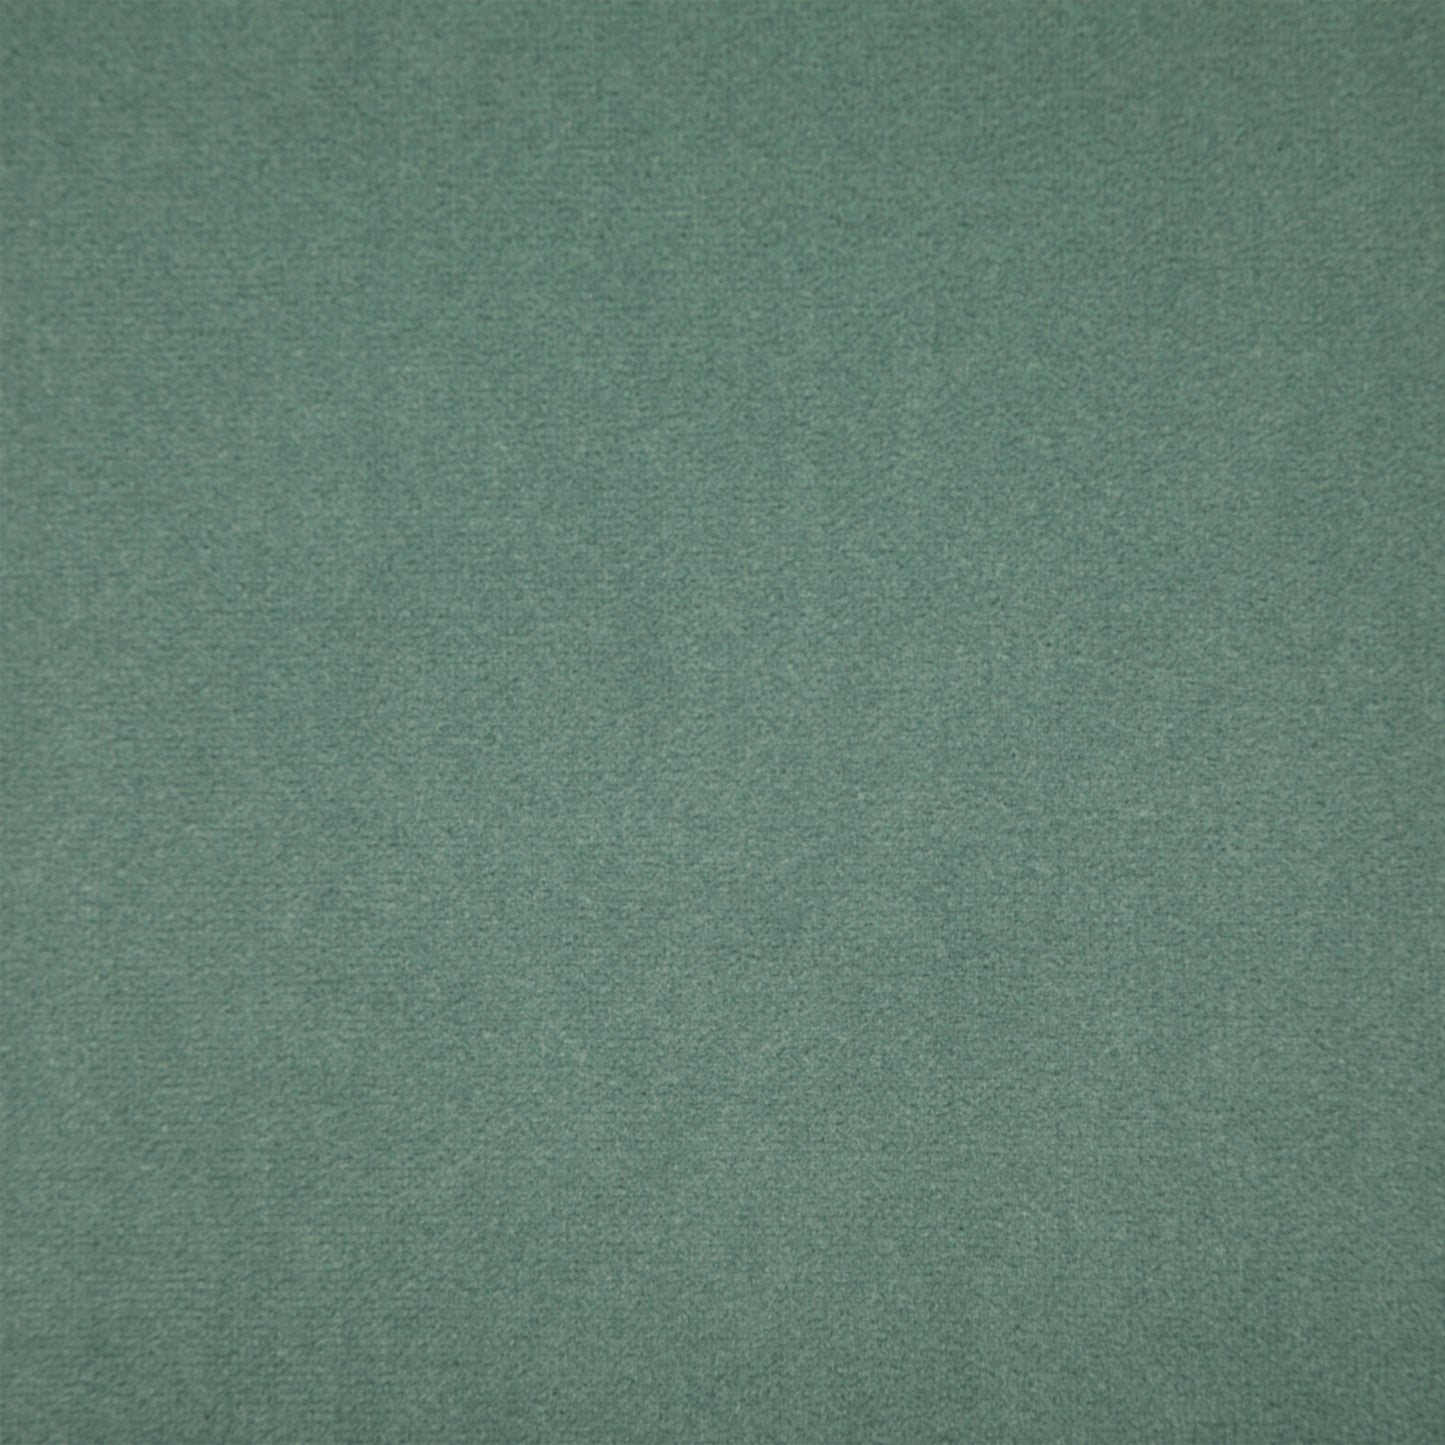 Atmosphera Fluwelen bank - Malone - Celadon groen - 98x51cm